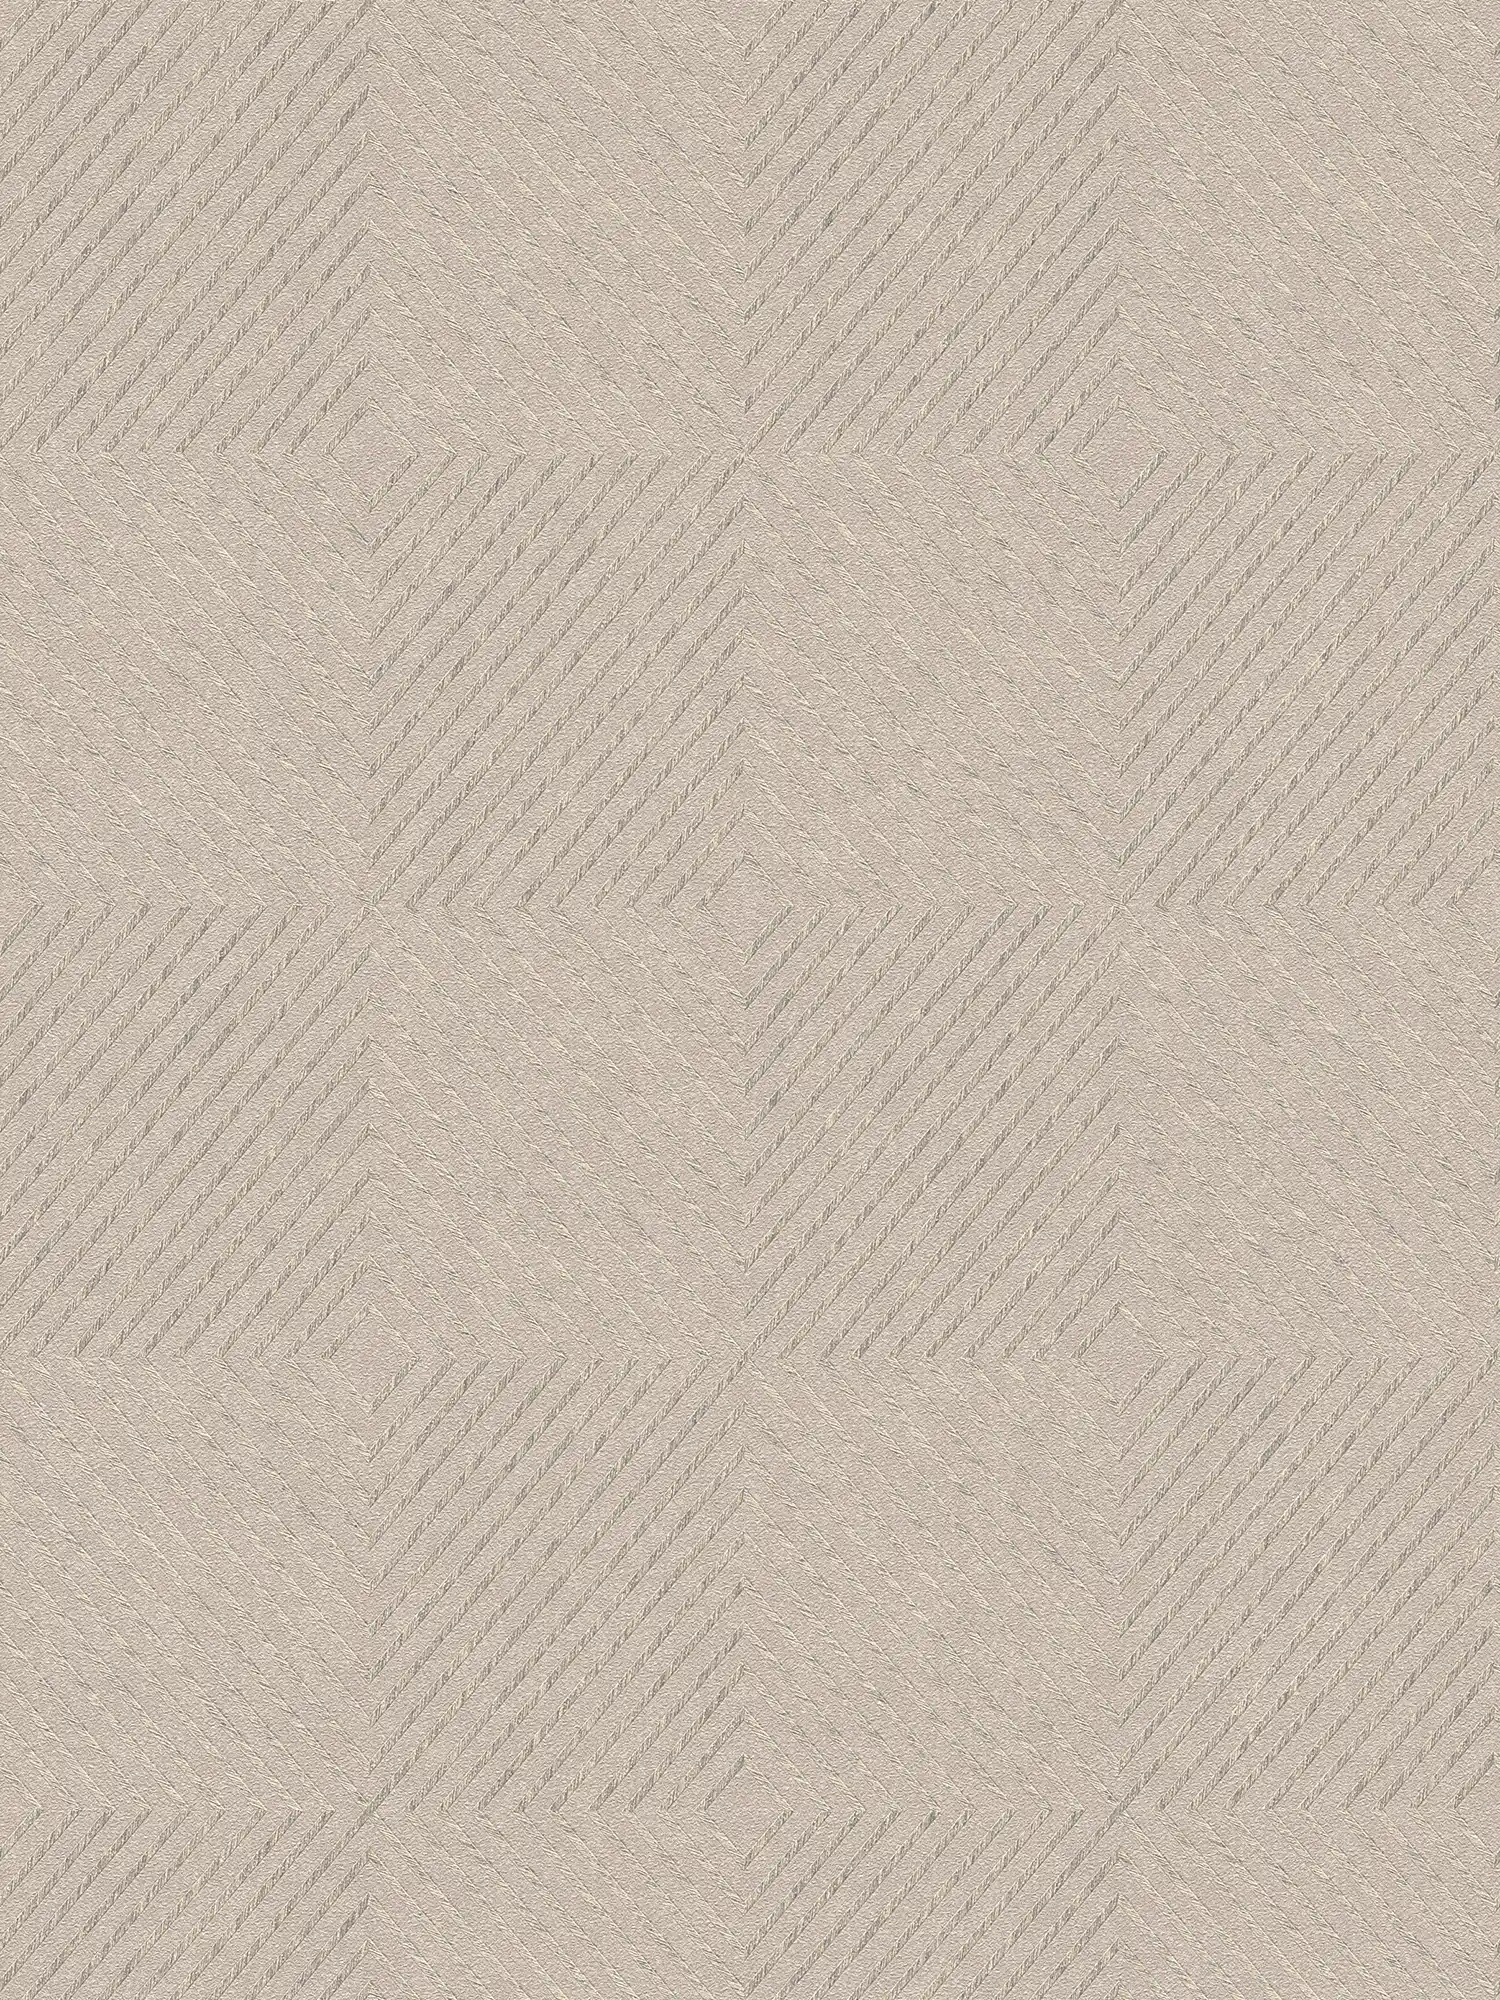 Wallpaper graphic design, Scandinavian style - beige, silver
